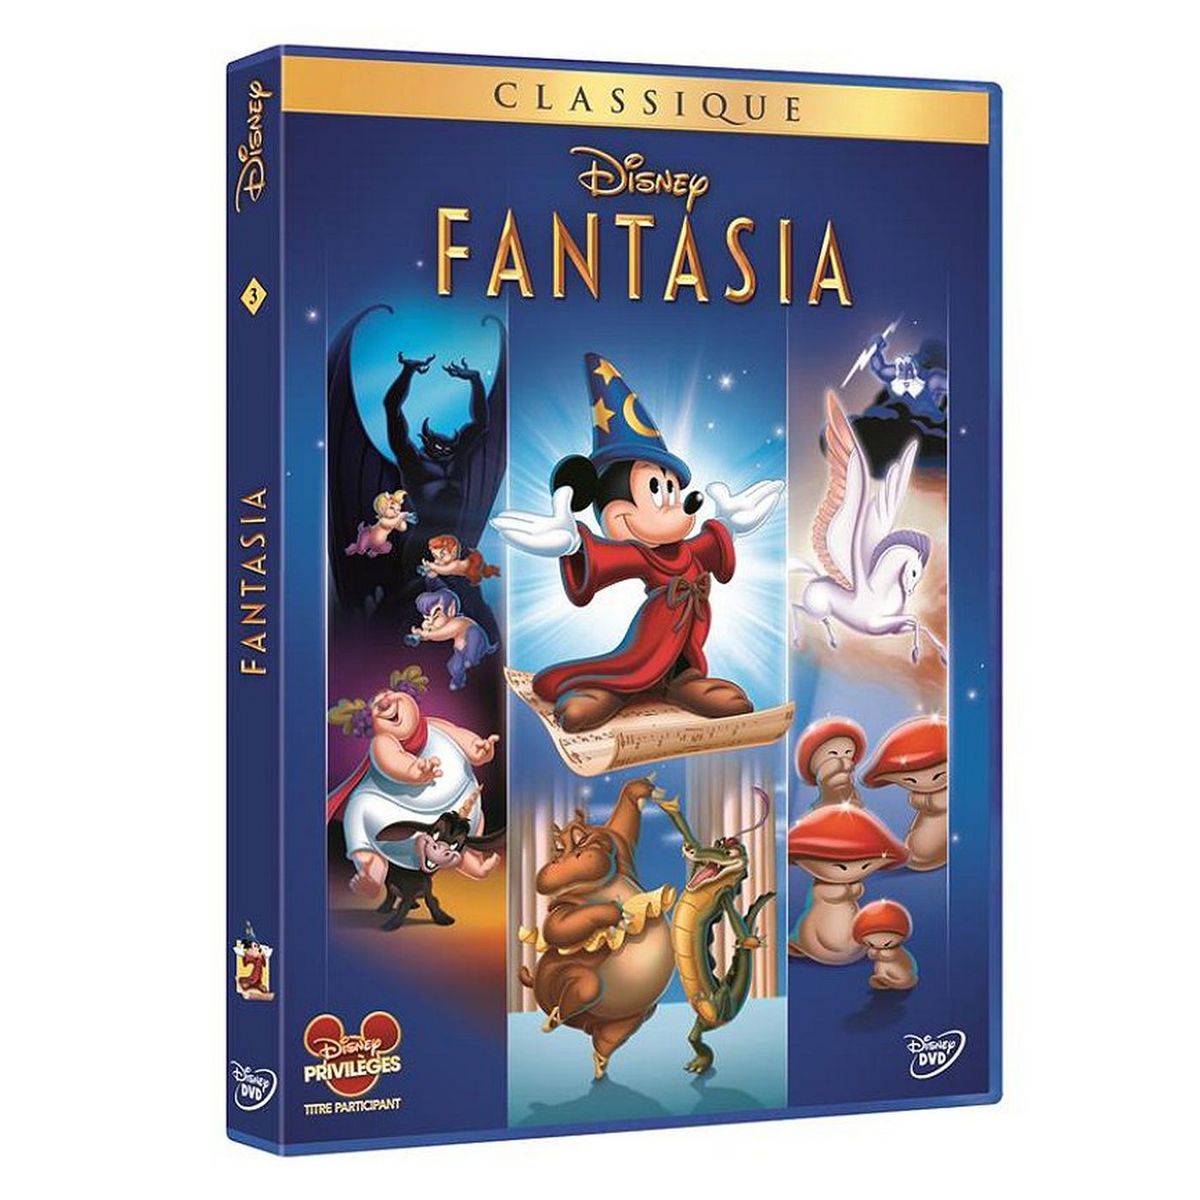 Fantasia DVD (1940)